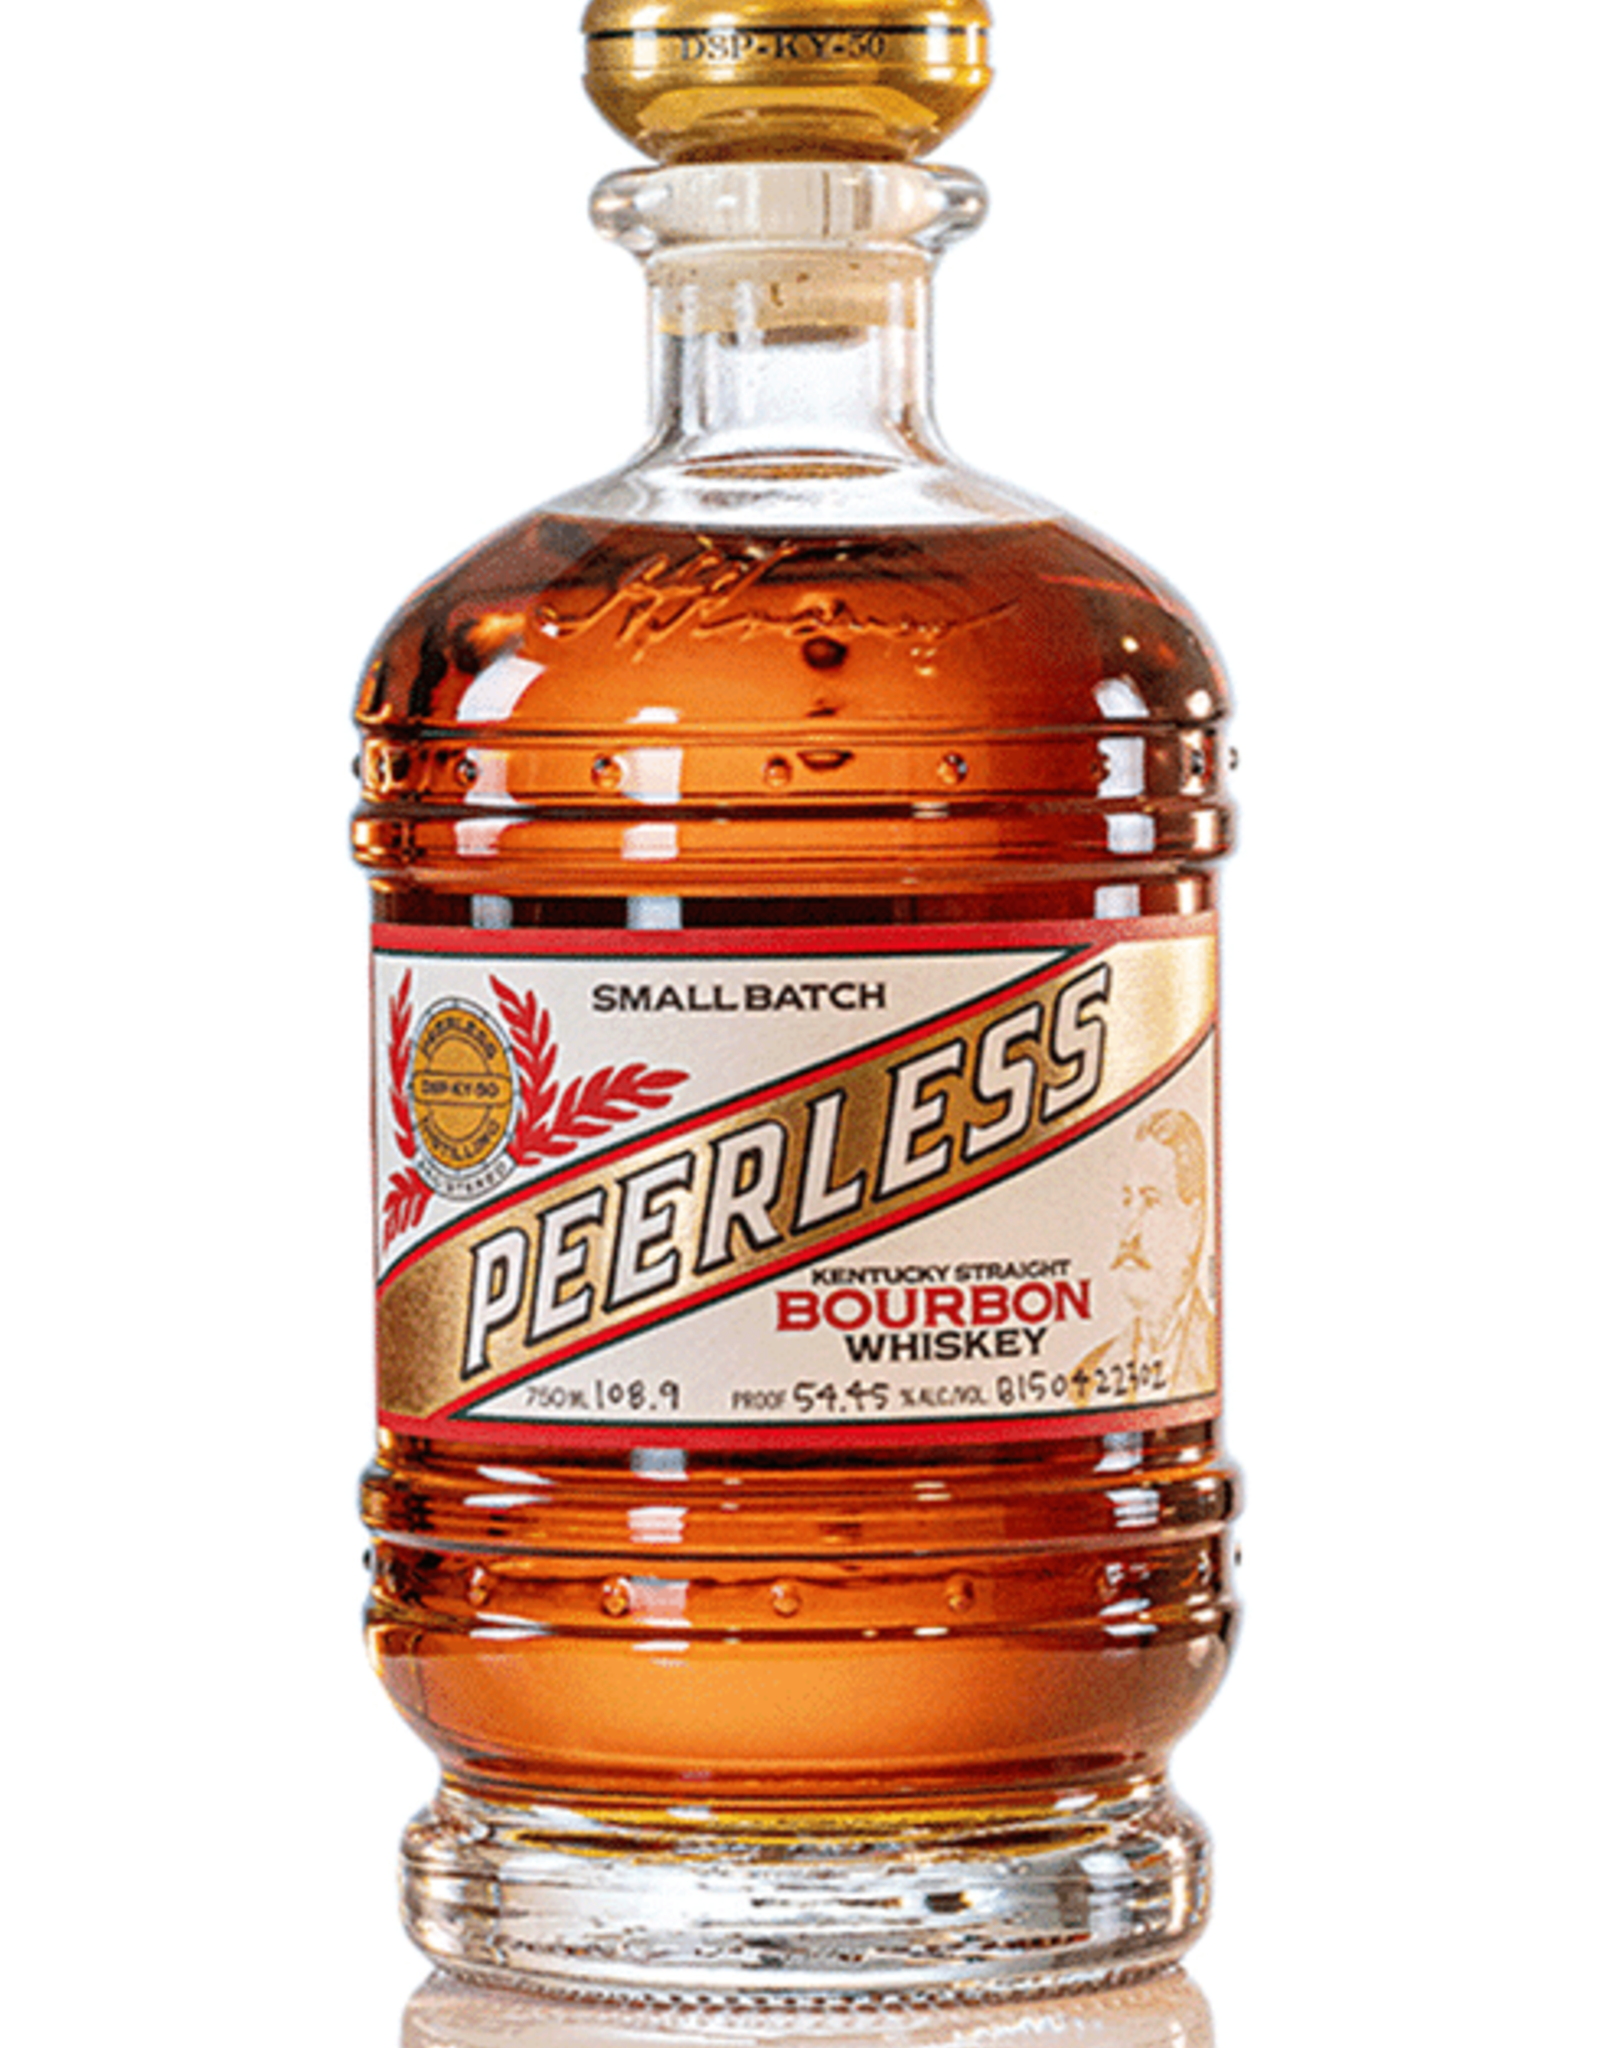 Peerless Peerless Small Batch Bourbon Whisk 750ML